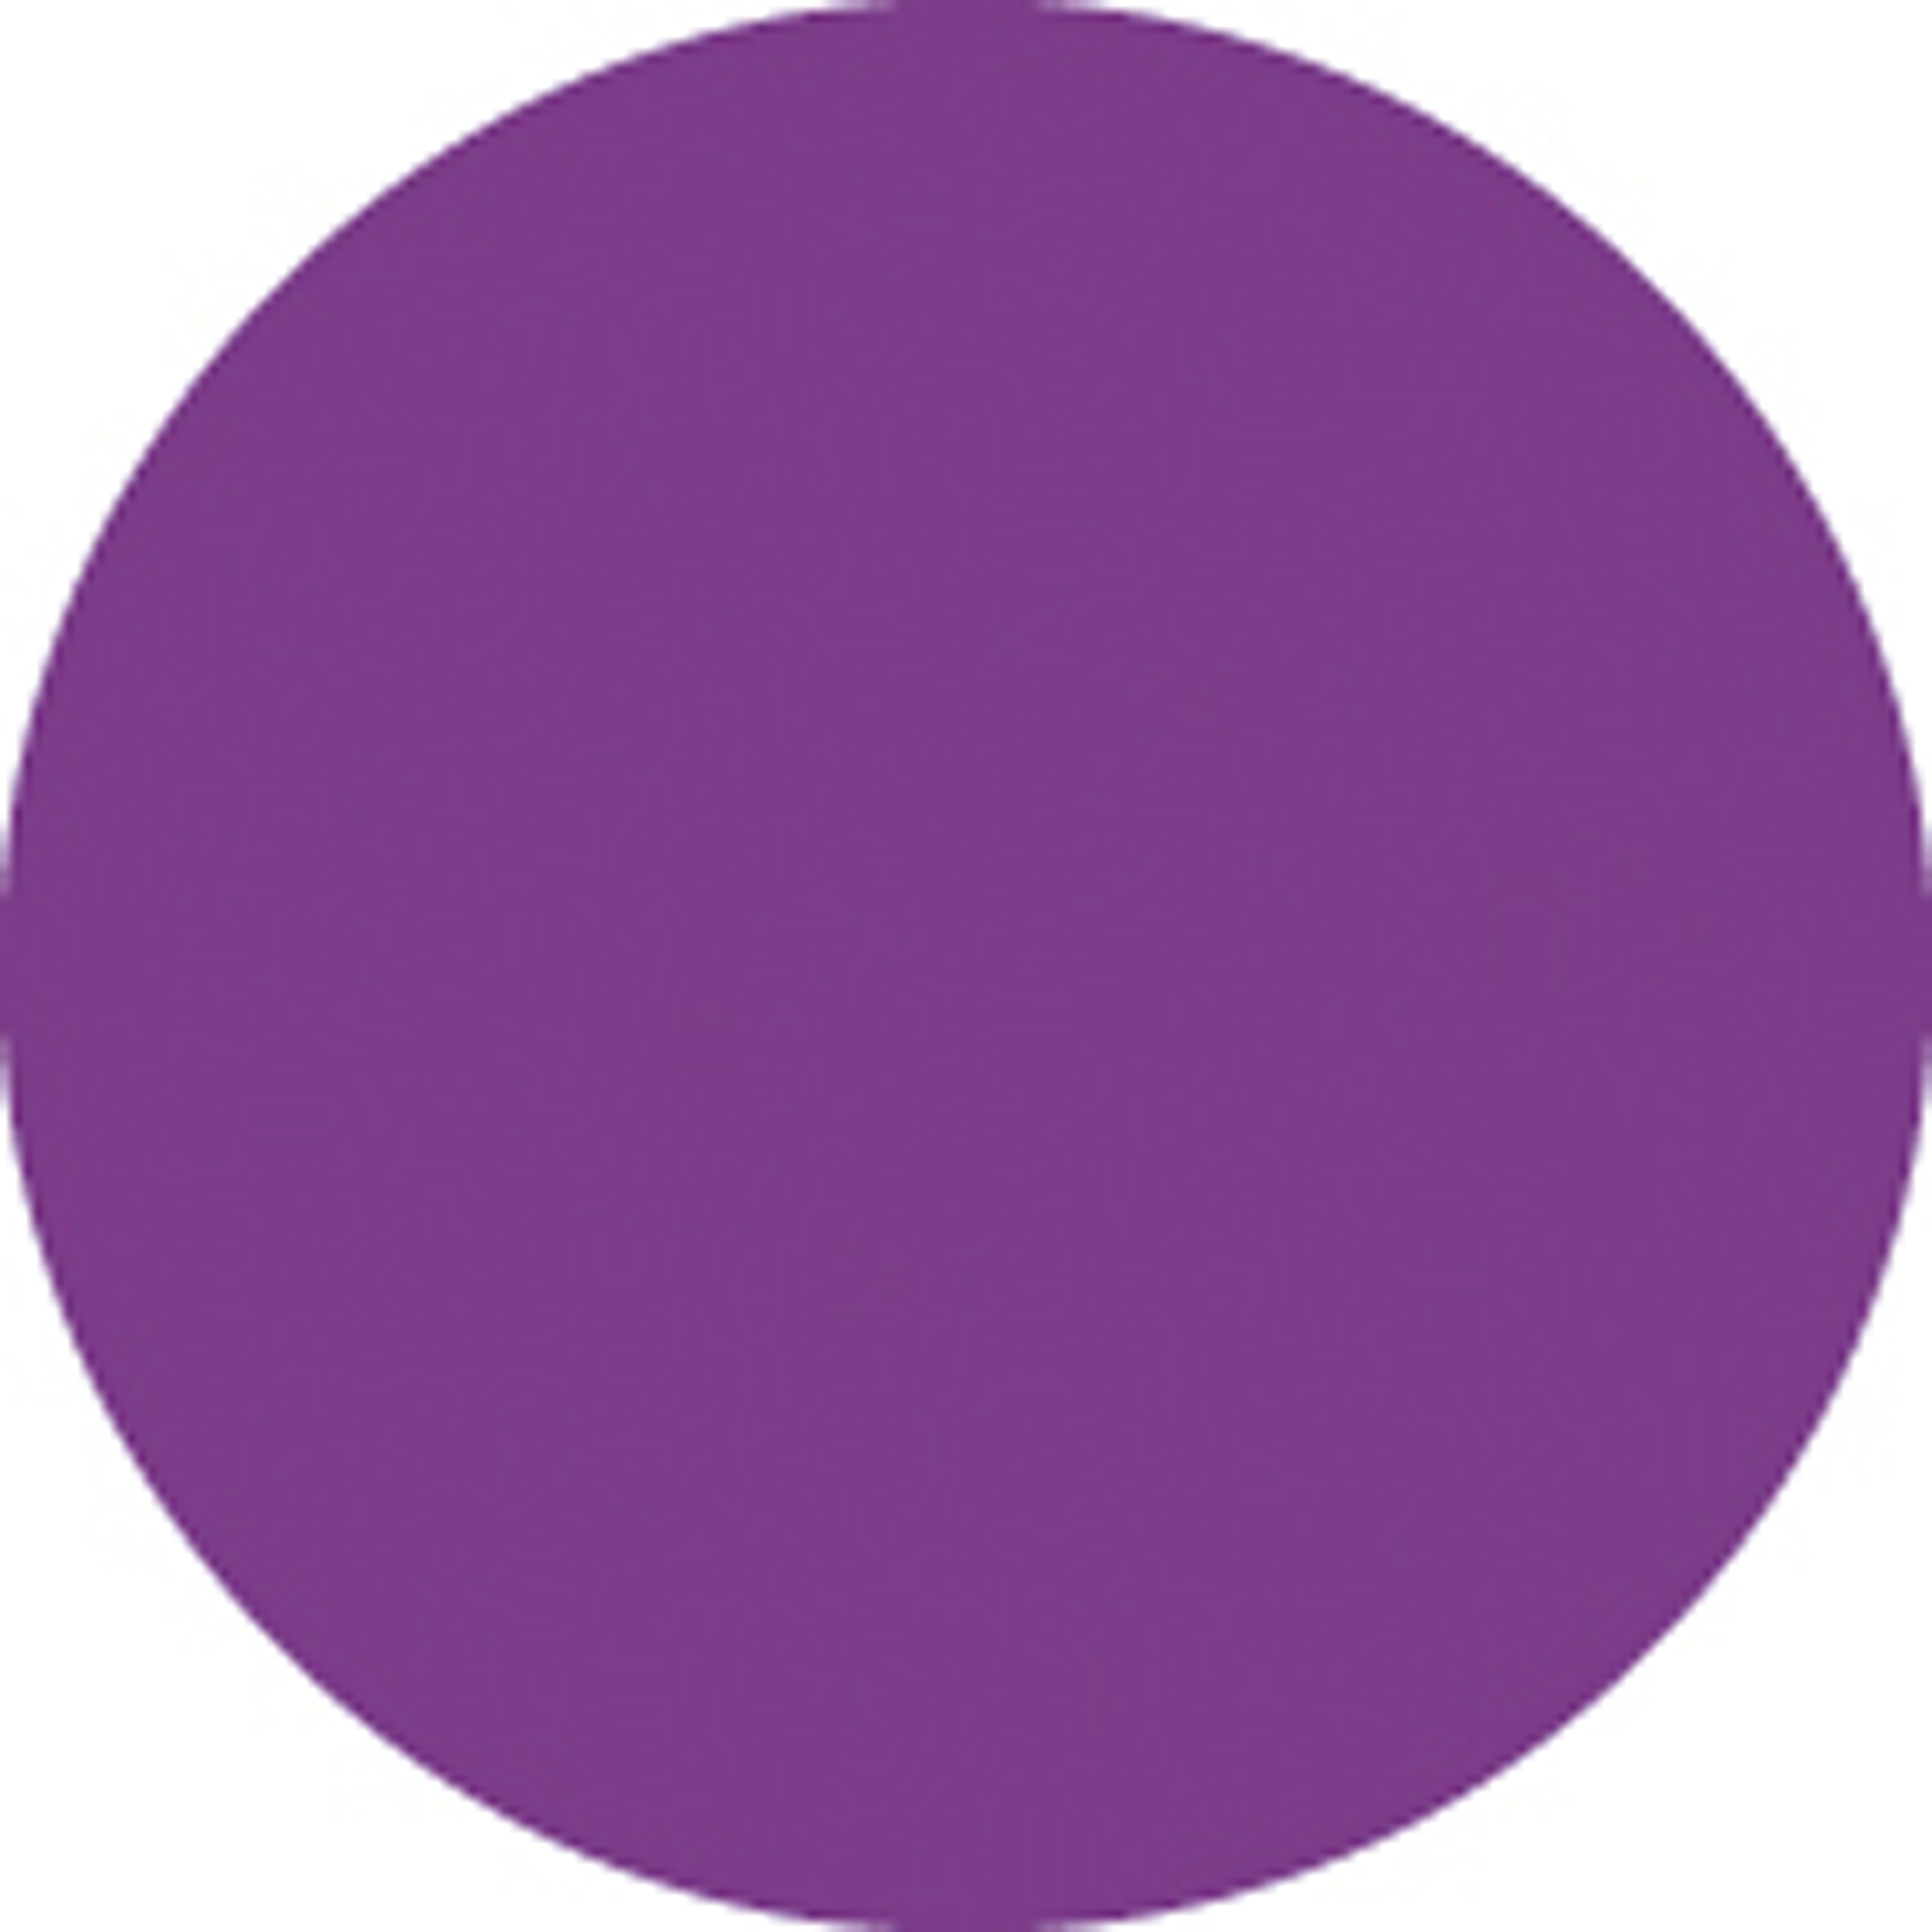 Showgear Colour Sheet 122 x 53 cm 170 Lavendelfarben